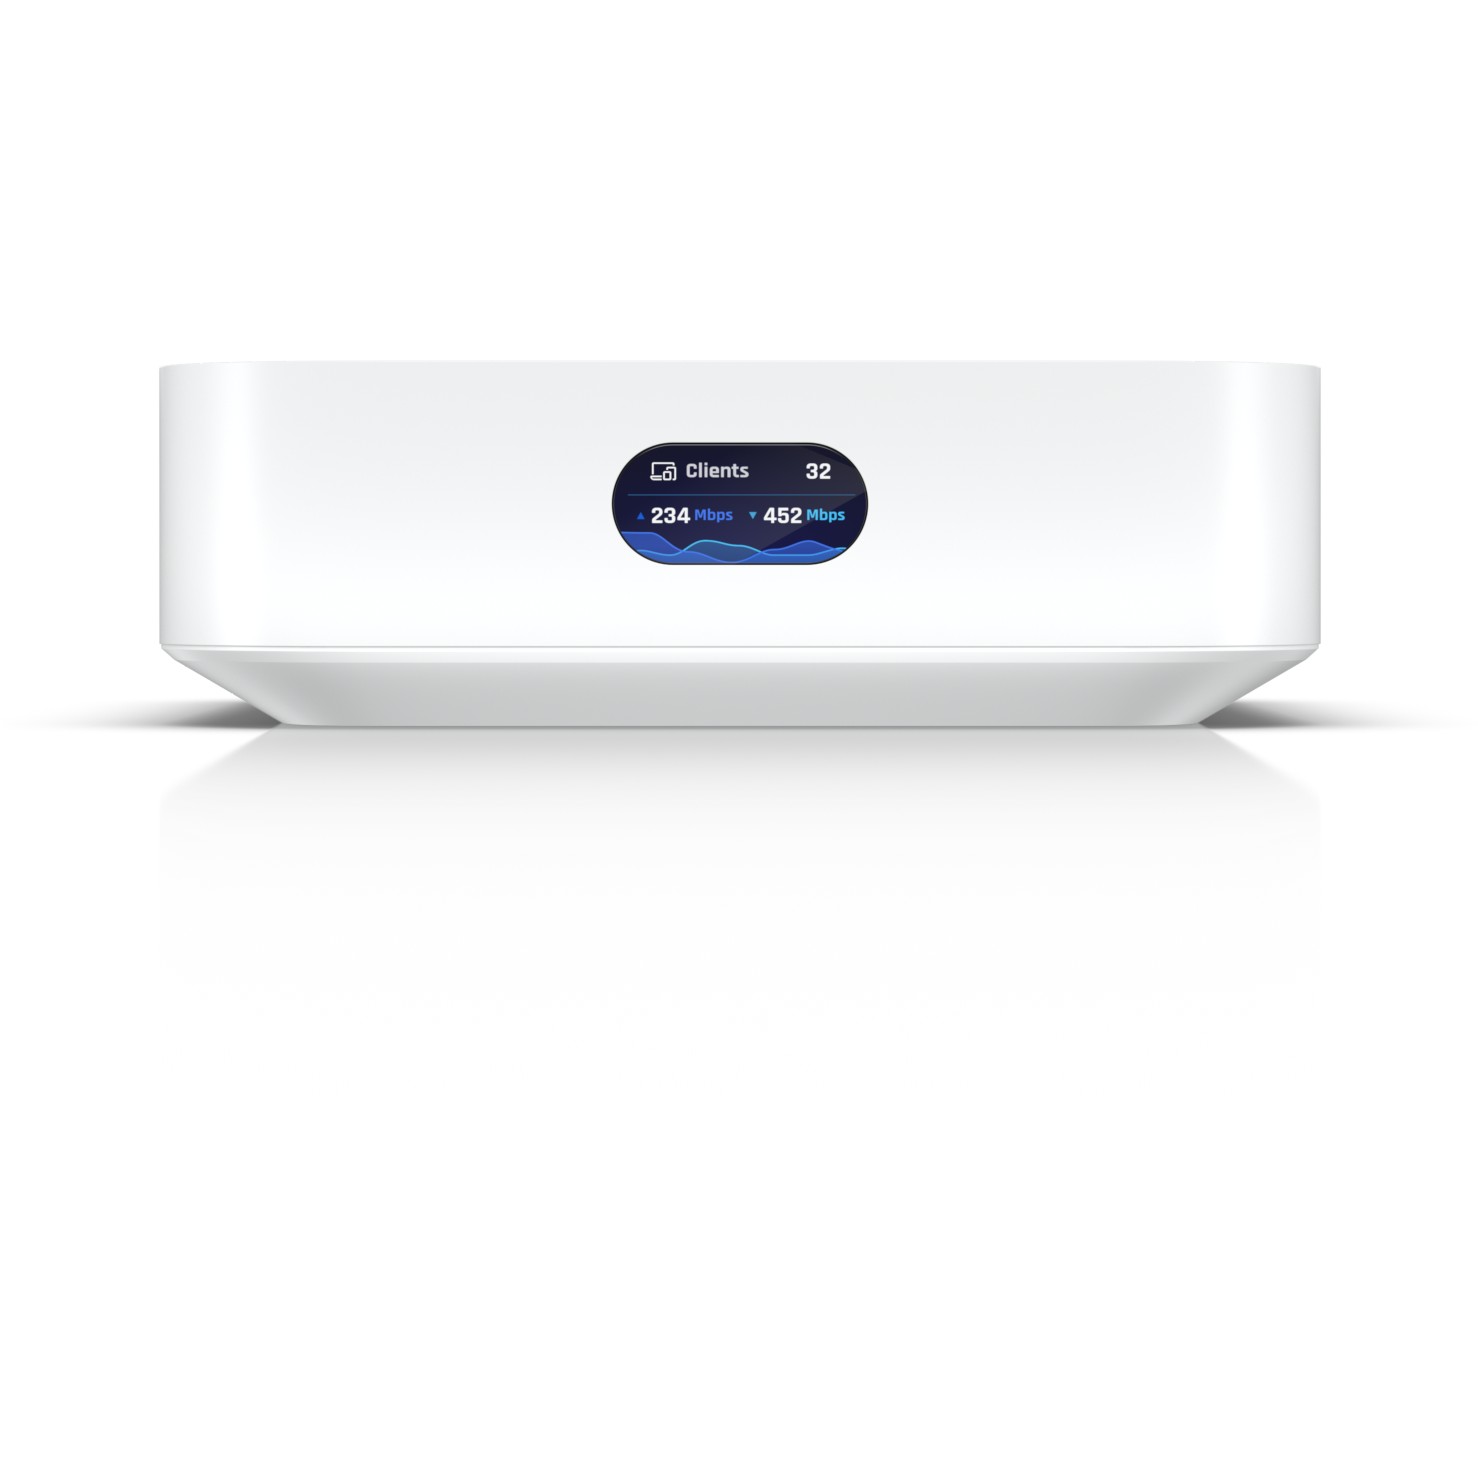 Ubiquiti UniFi Express wireless router